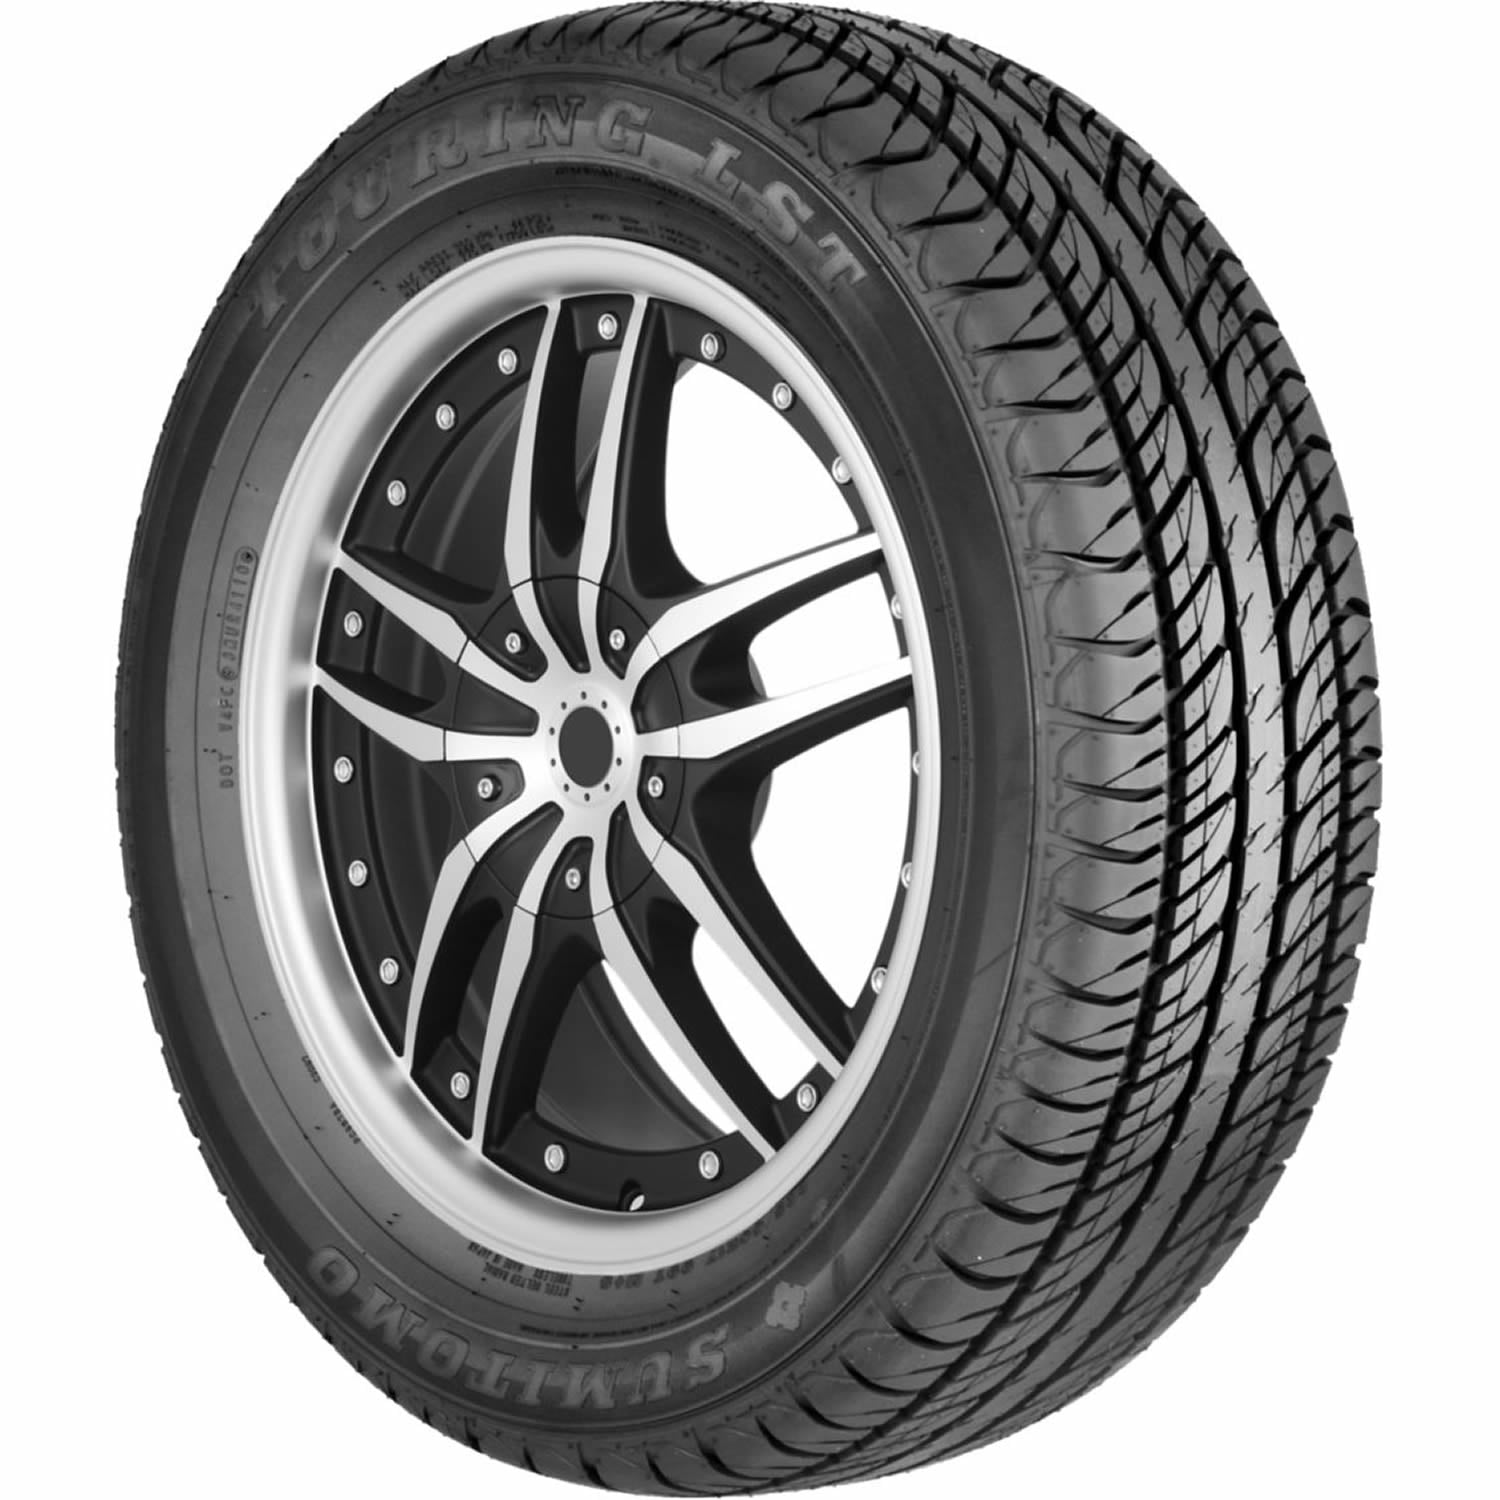 SUMITOMO TOURING LS 215/60R15 (25.4X8.3R 15) Tires